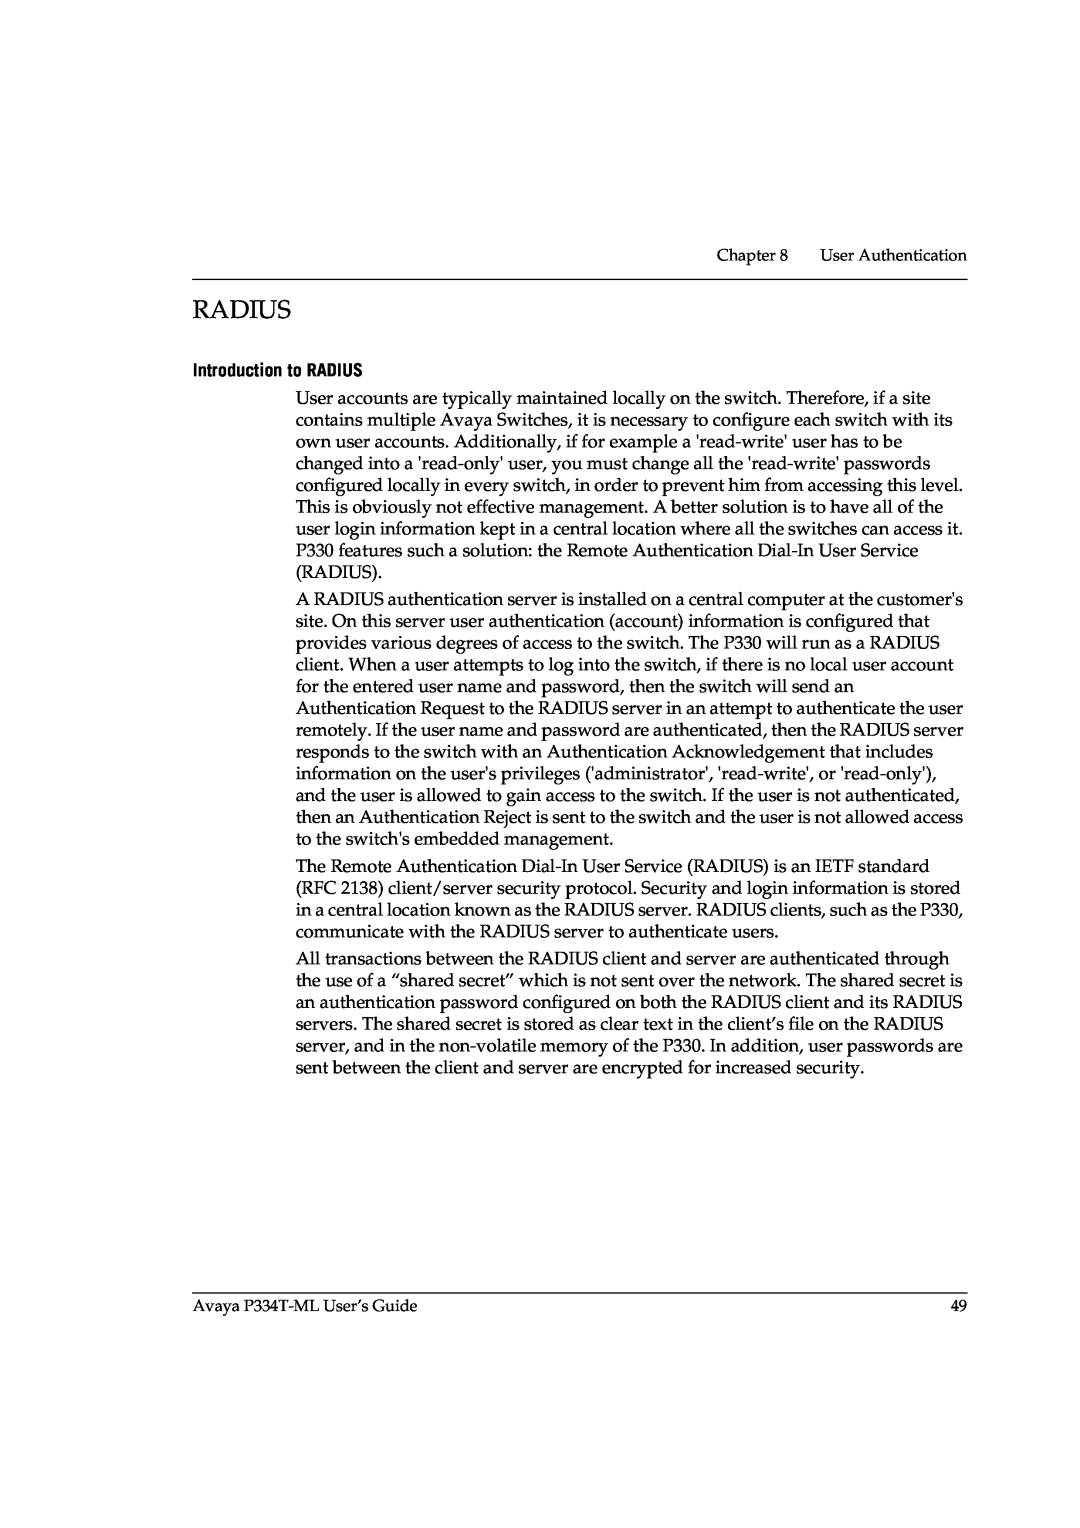 Avaya P3343T-ML manual Radius, Introduction to RADIUS 